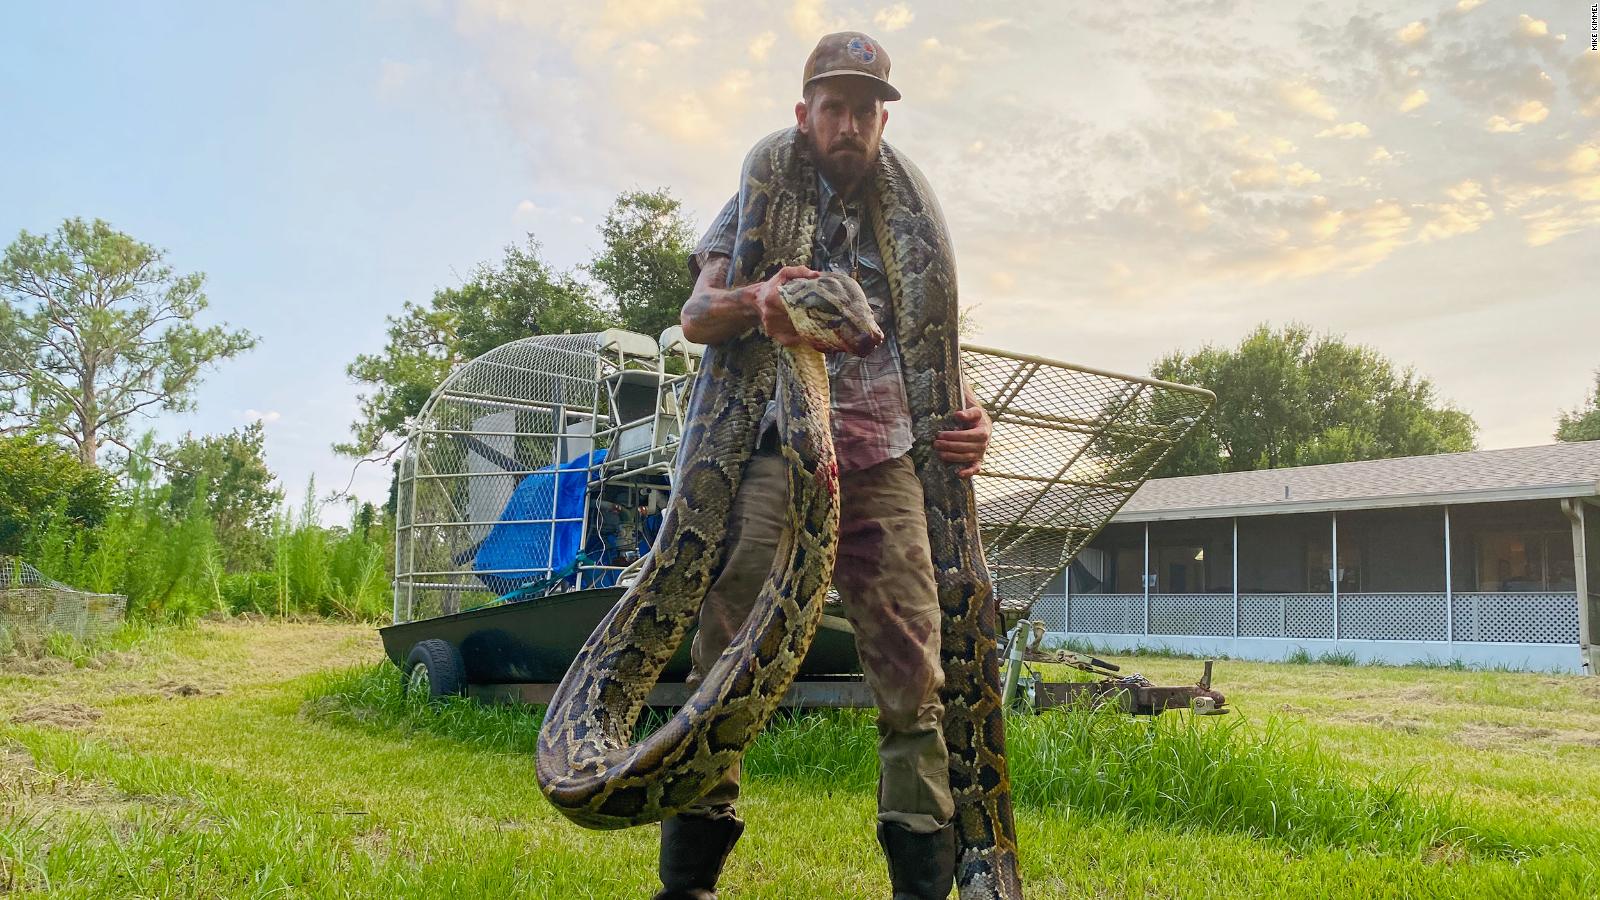 17foot python caught in Florida CNN